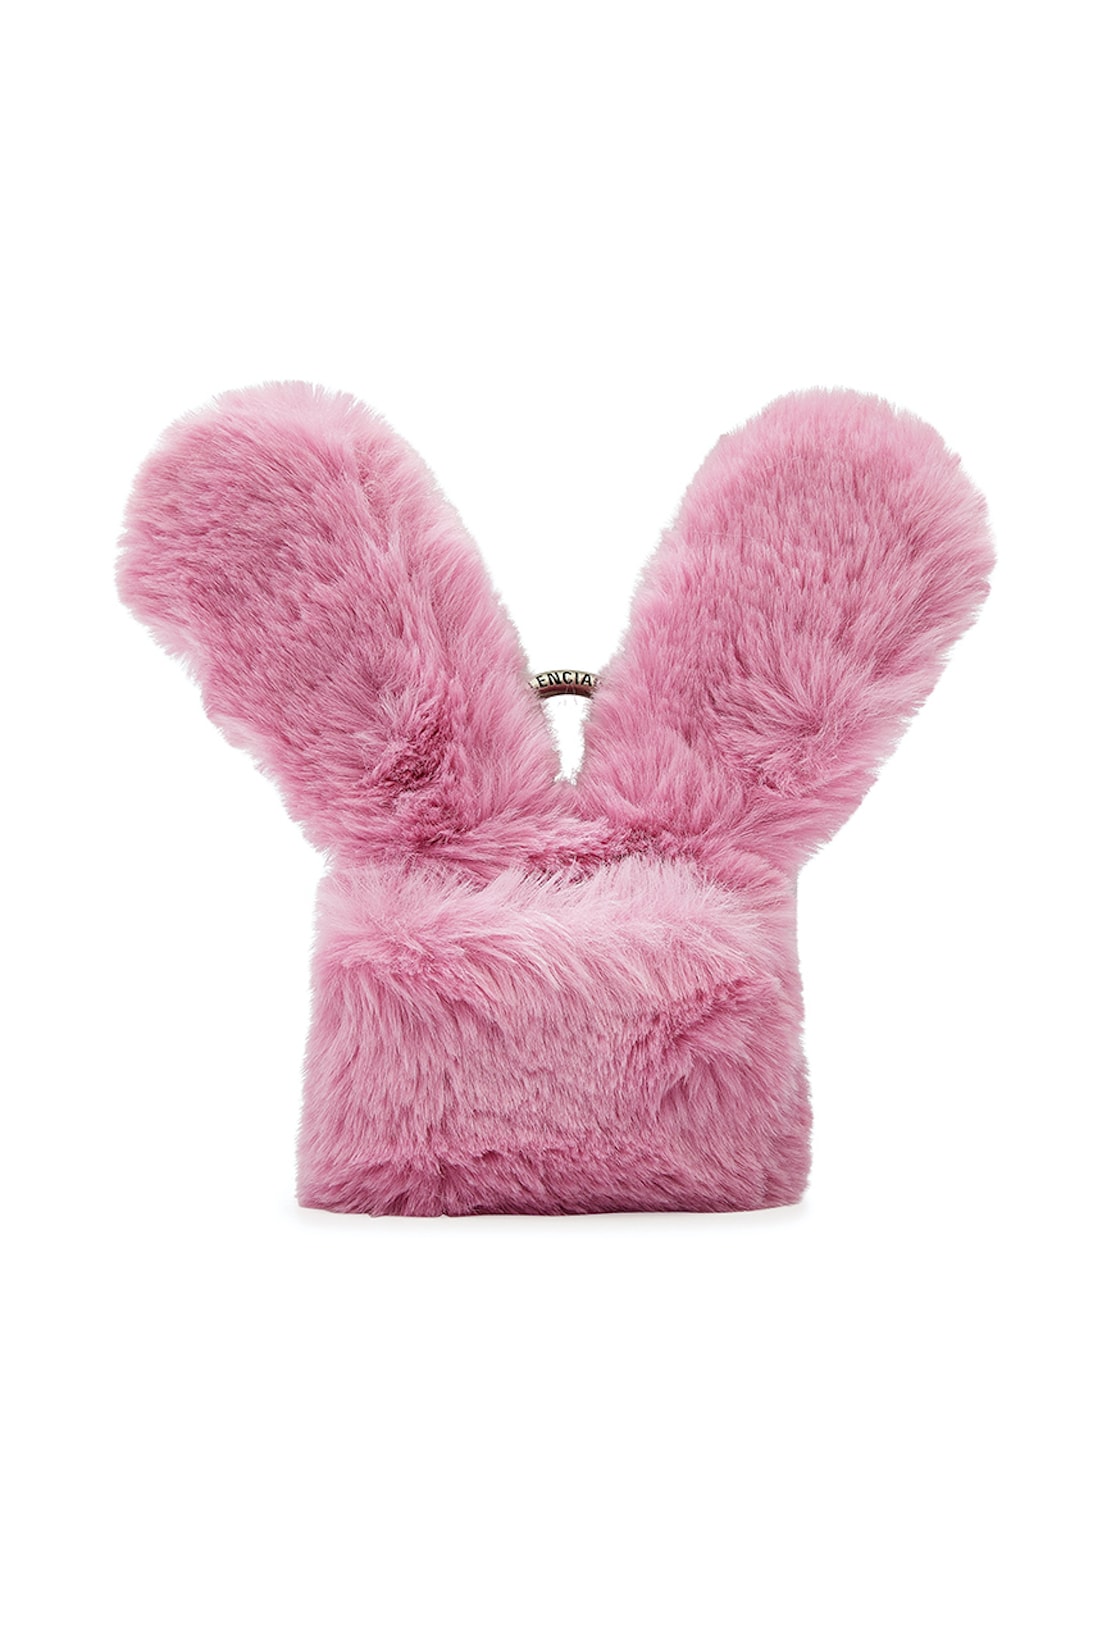 Balenciaga Pink Bunny Apple AirPOds Pro Cases Faux Fur